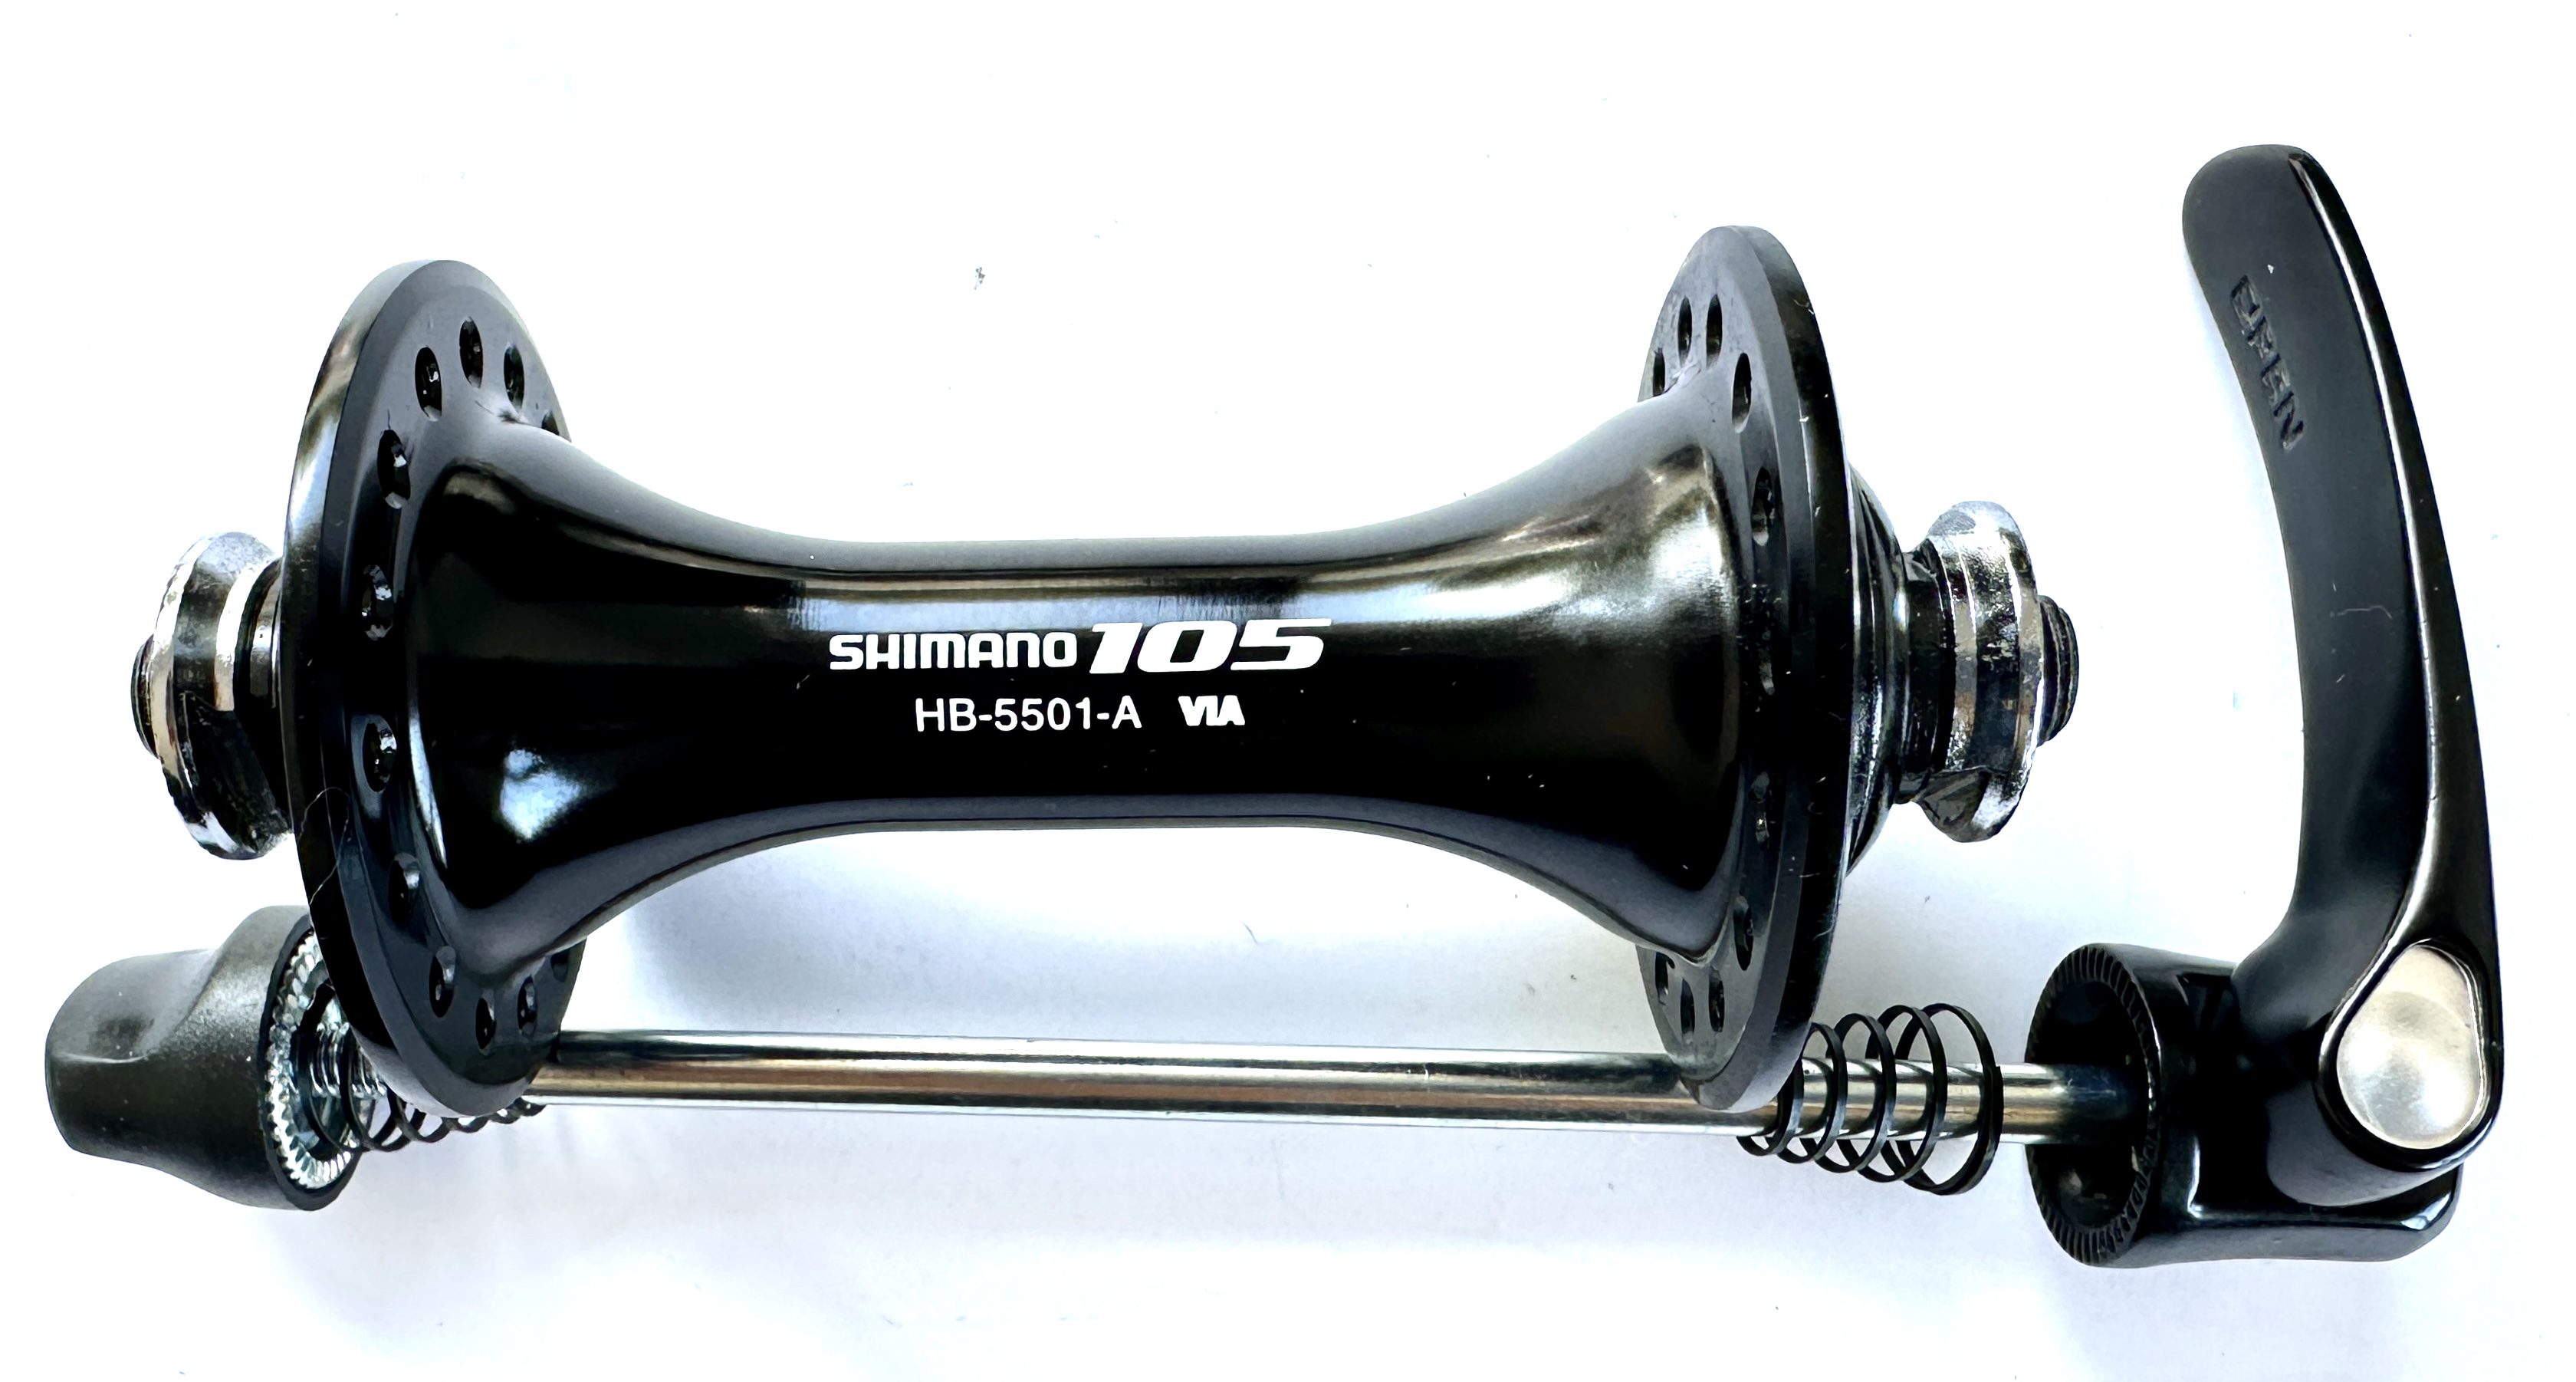 Shimano 105 HB-5501 front hub 32-hole, black